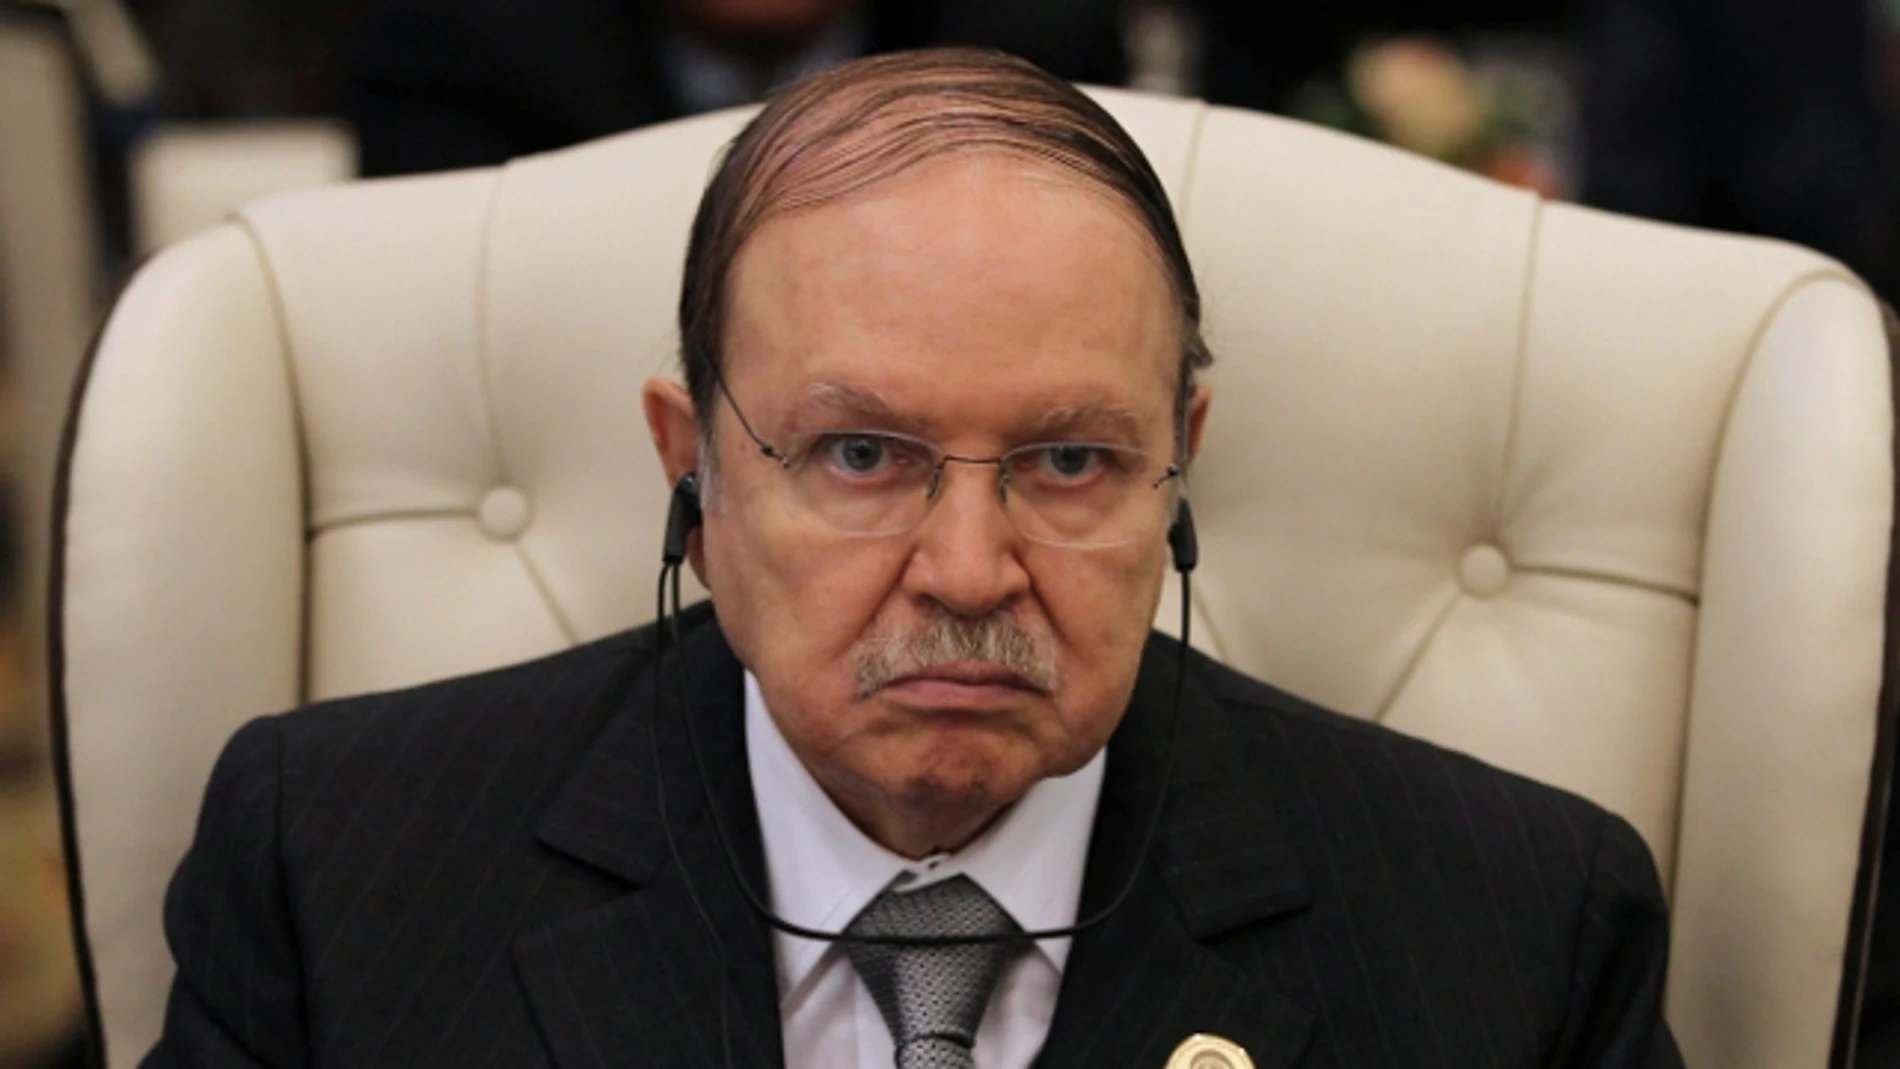 El presidente argelino, Abdelaziz Buteflika